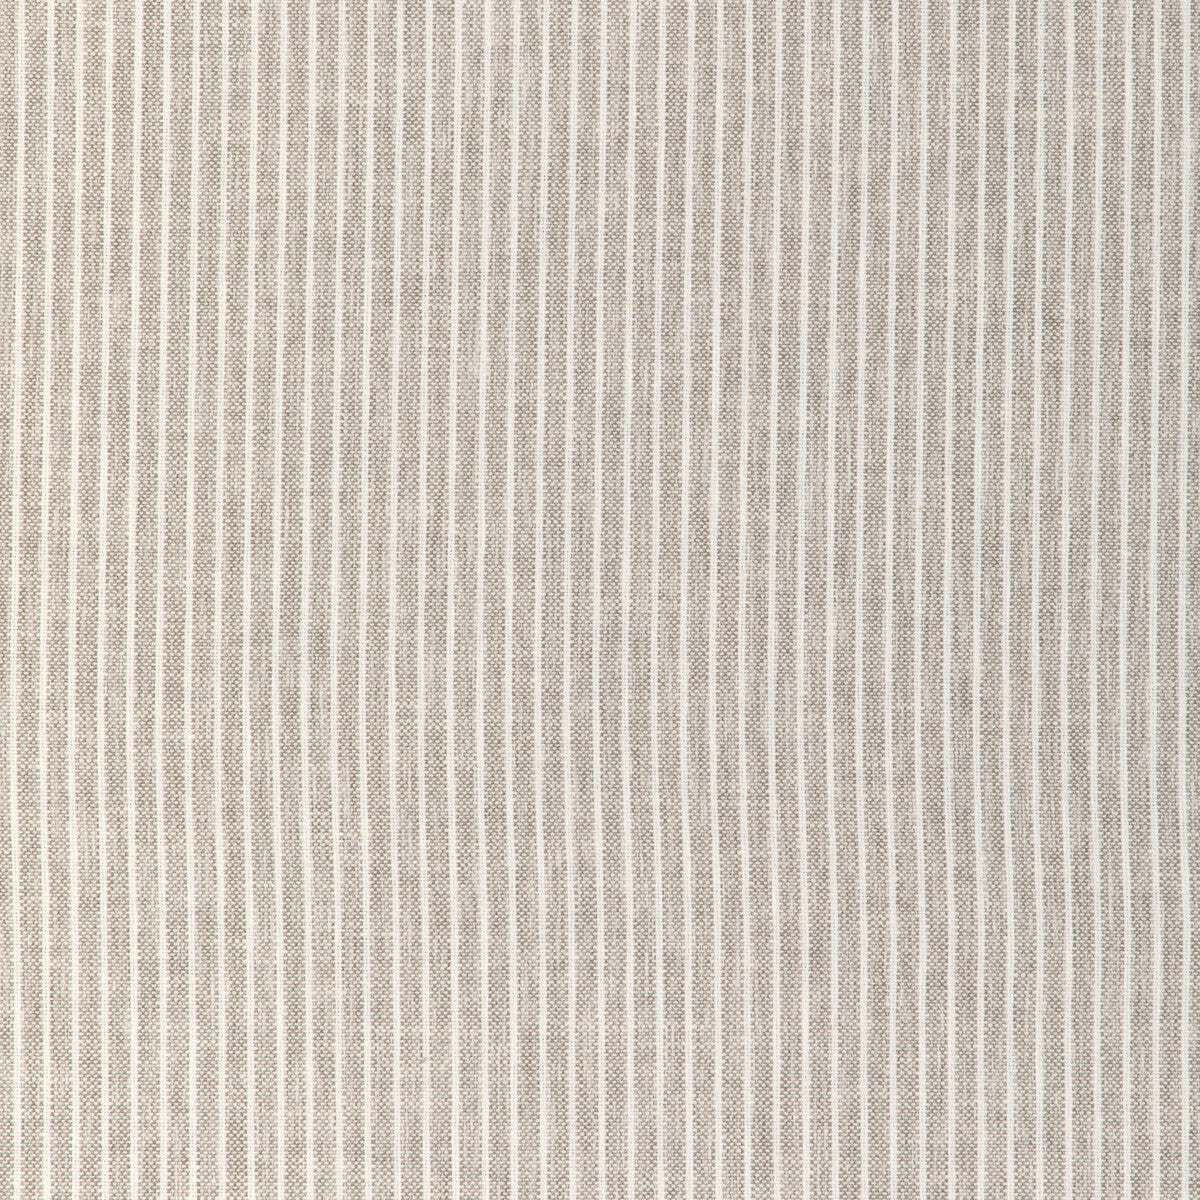 Kravet Smart fabric in 36655-161 color - pattern 36655.161.0 - by Kravet Smart in the Performance Kravetarmor collection